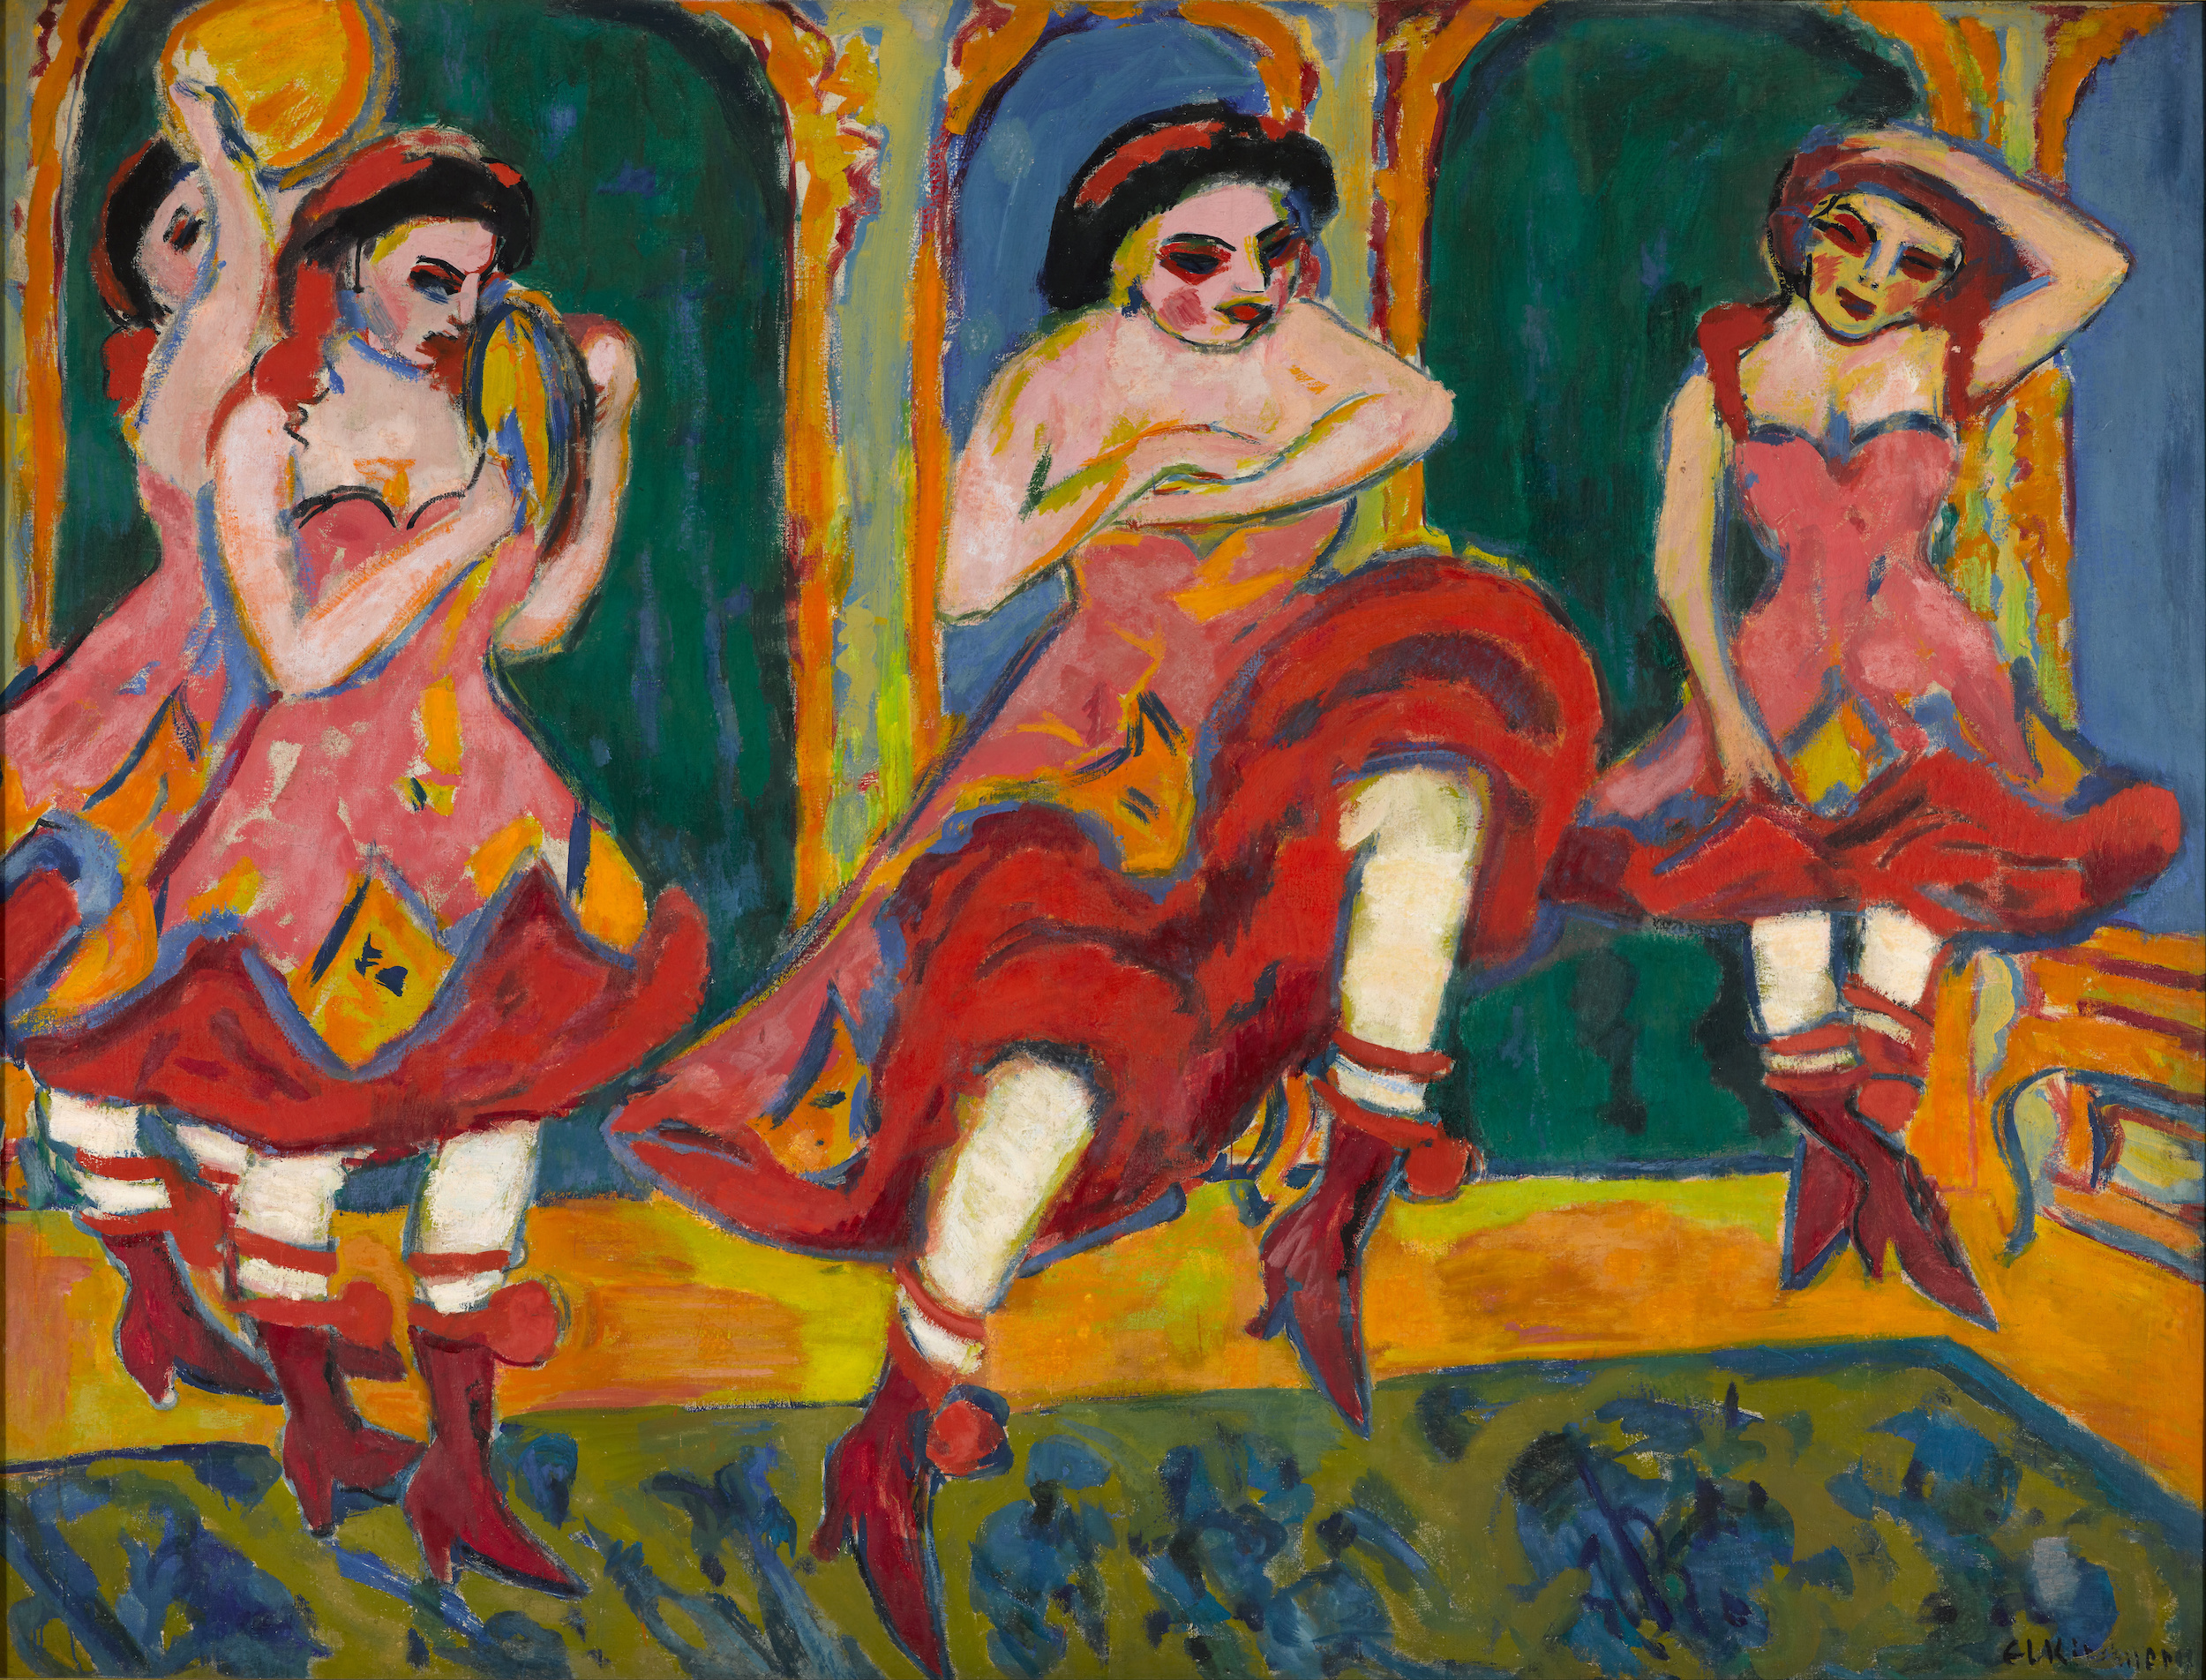 沙達斯舞者 by Ernst Ludwig Kirchner - 1908-1920 - 223.2 x 172.2 cm 